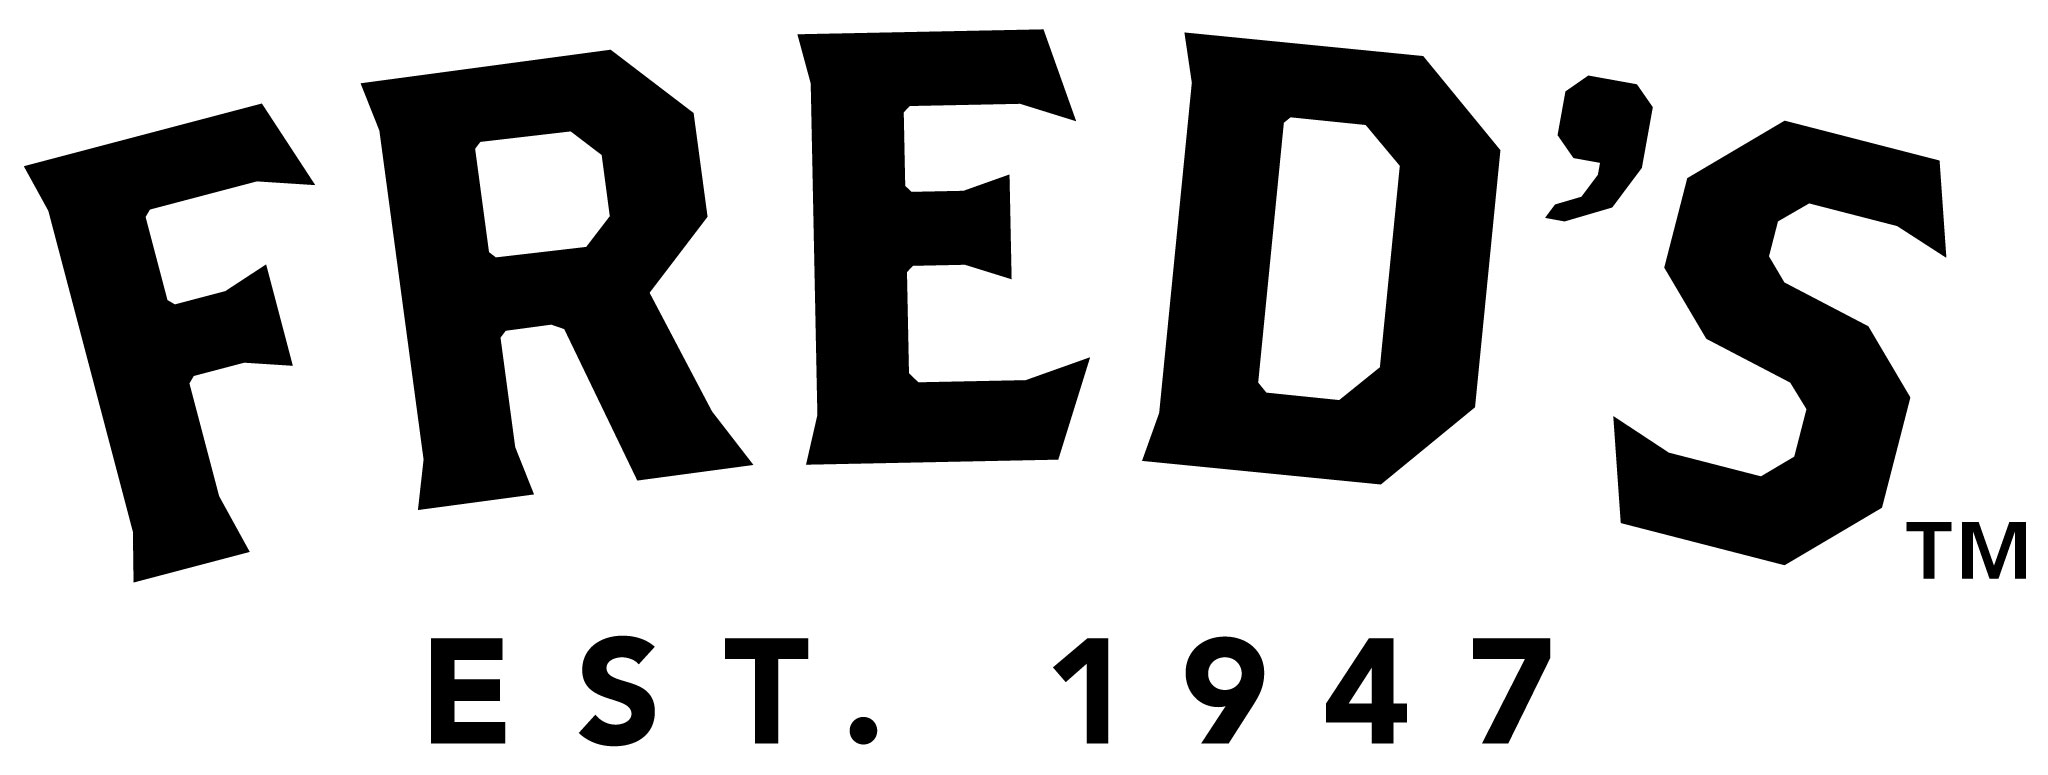 Fred's, Inc.